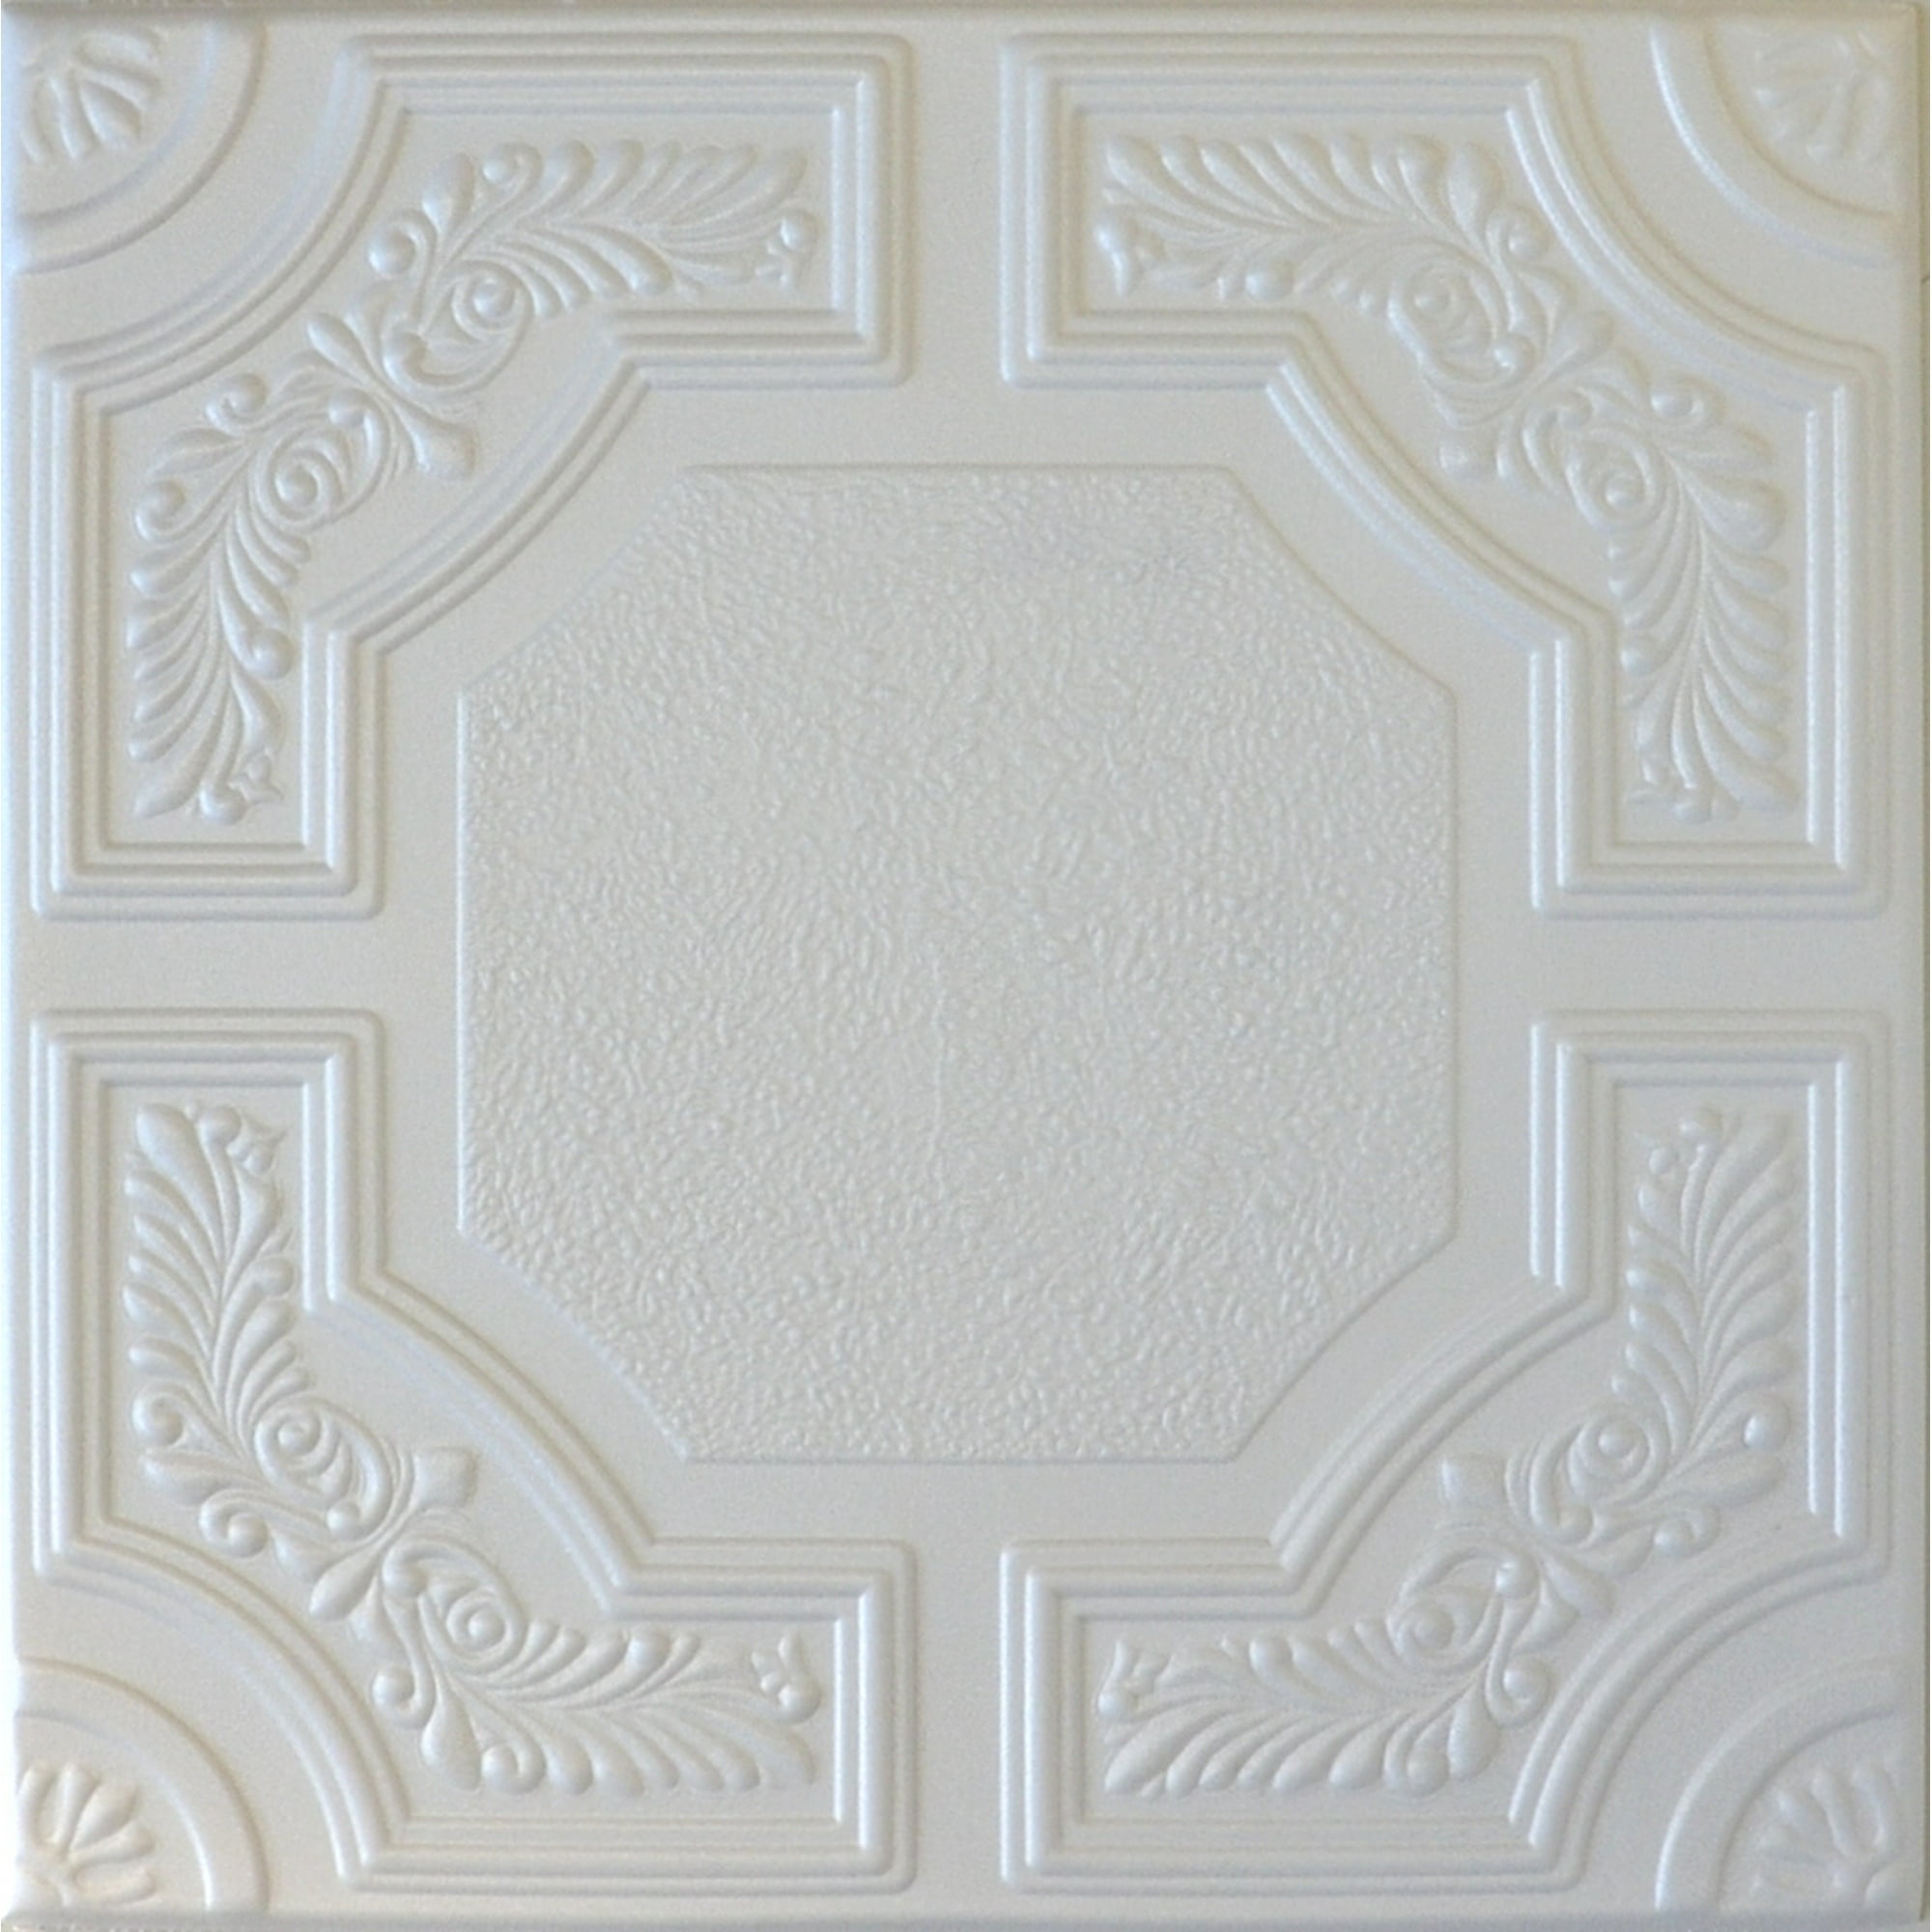 Styro Pro Polystyrene Decorative Ceiling Tiles 8 Pack Walmart Canada